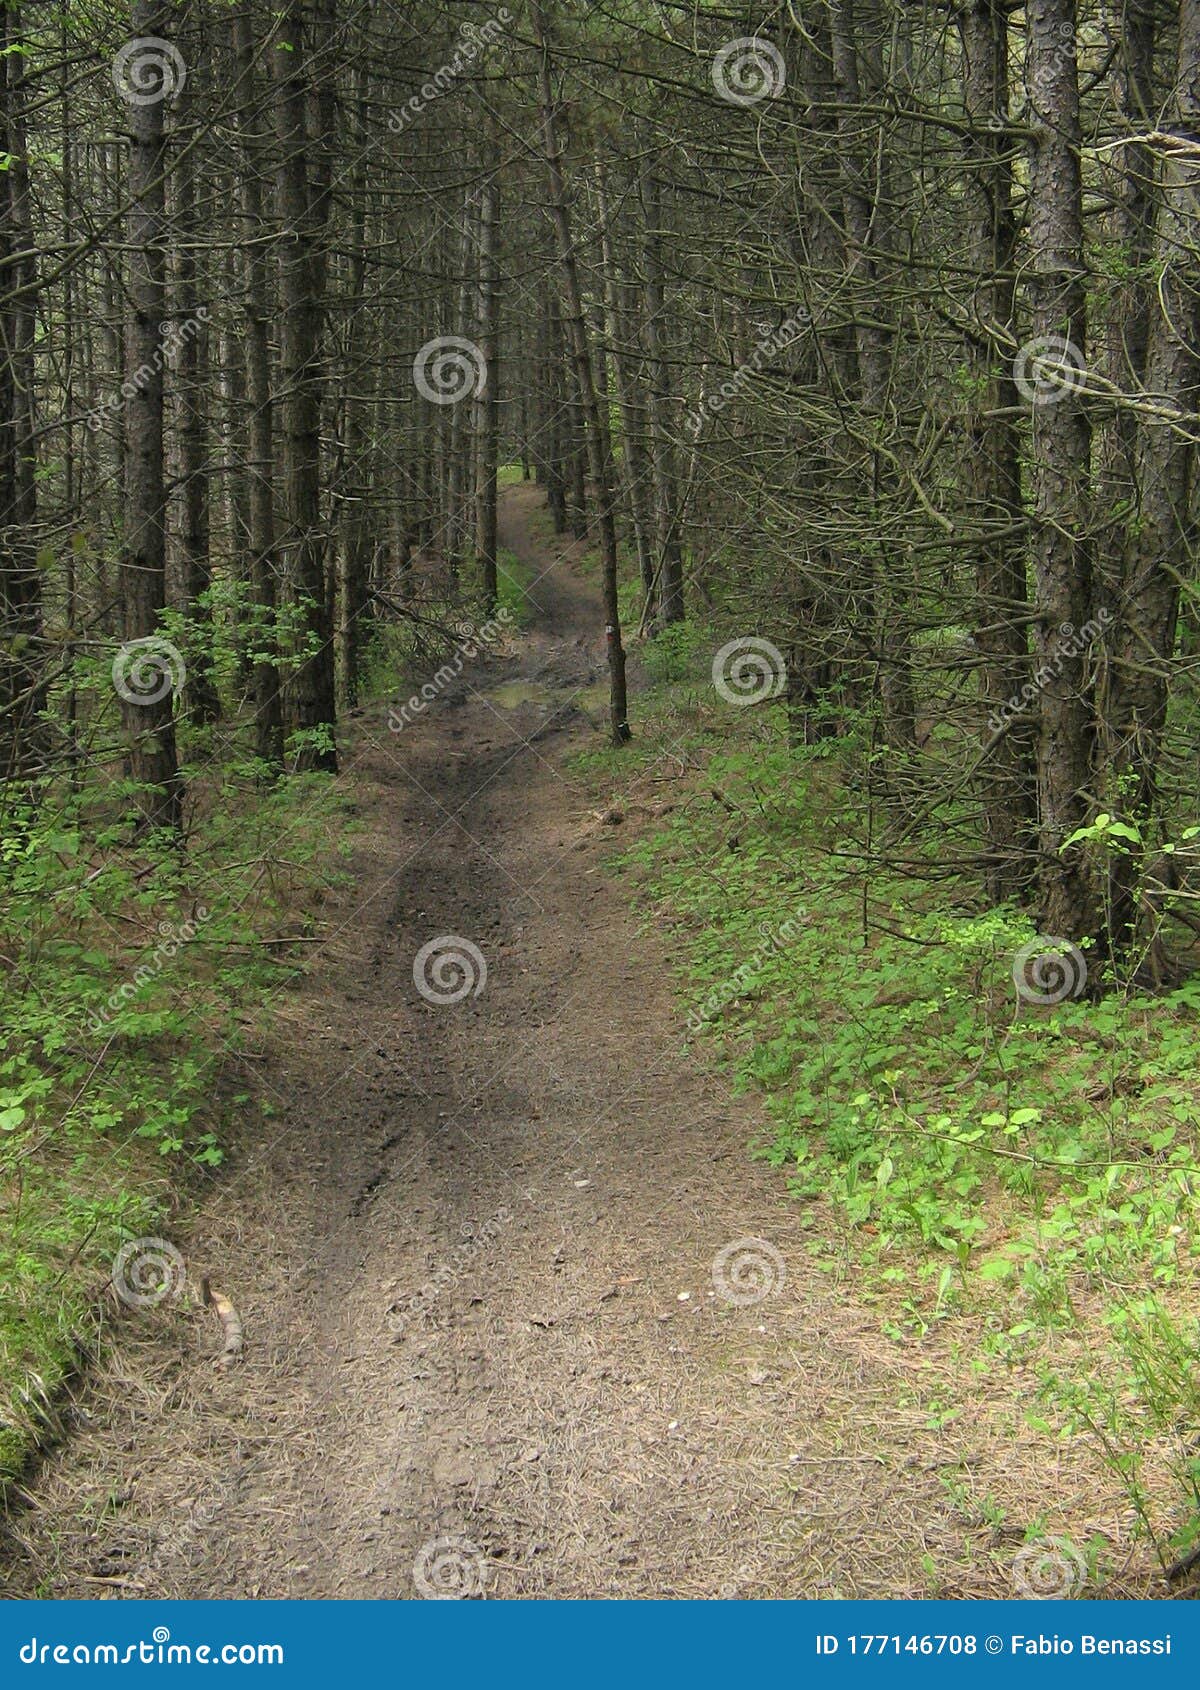 cozzano pineta, provincia di parma,italy, path in the pine and fir forest